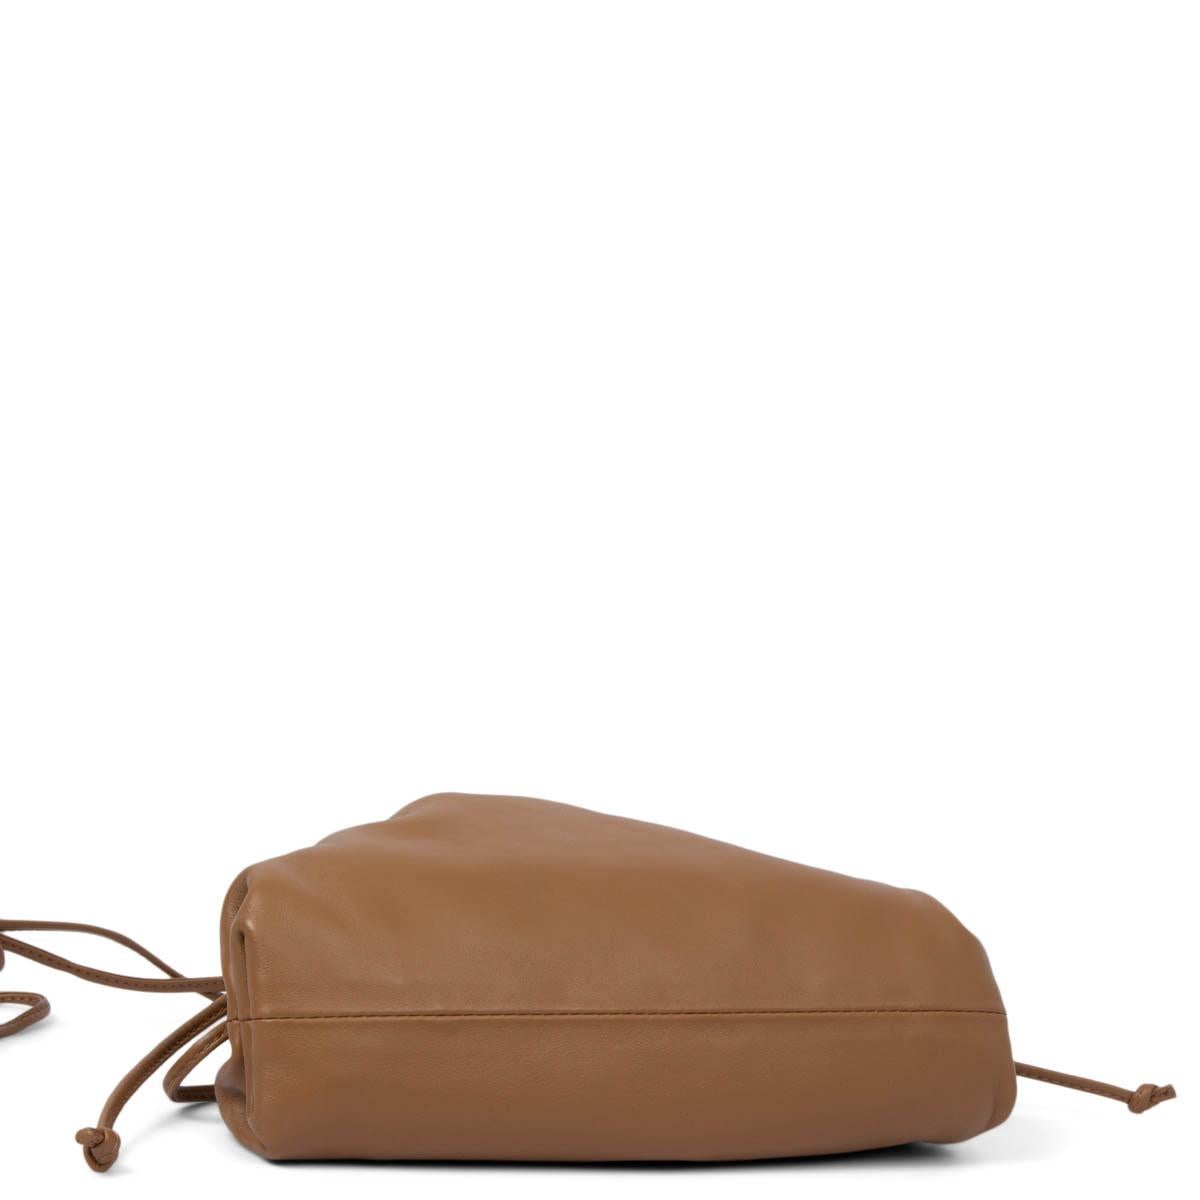 BOTTEGA VENETA camel brown leather MINI POUCH Crossbody Bag 2